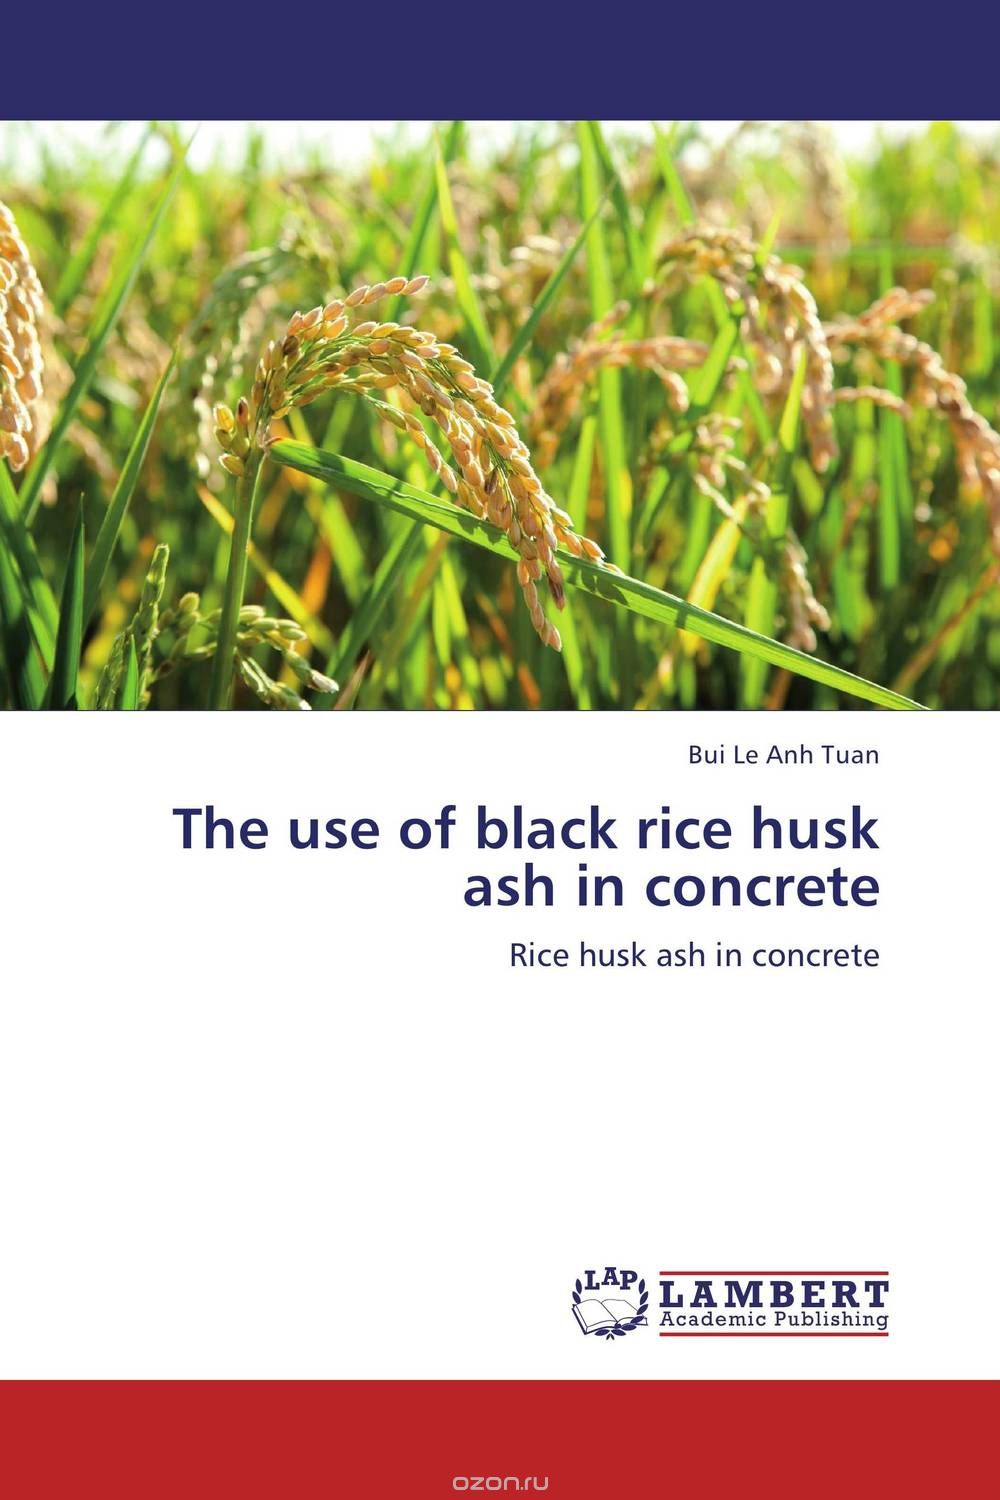 Скачать книгу "The use of black rice husk ash in concrete"